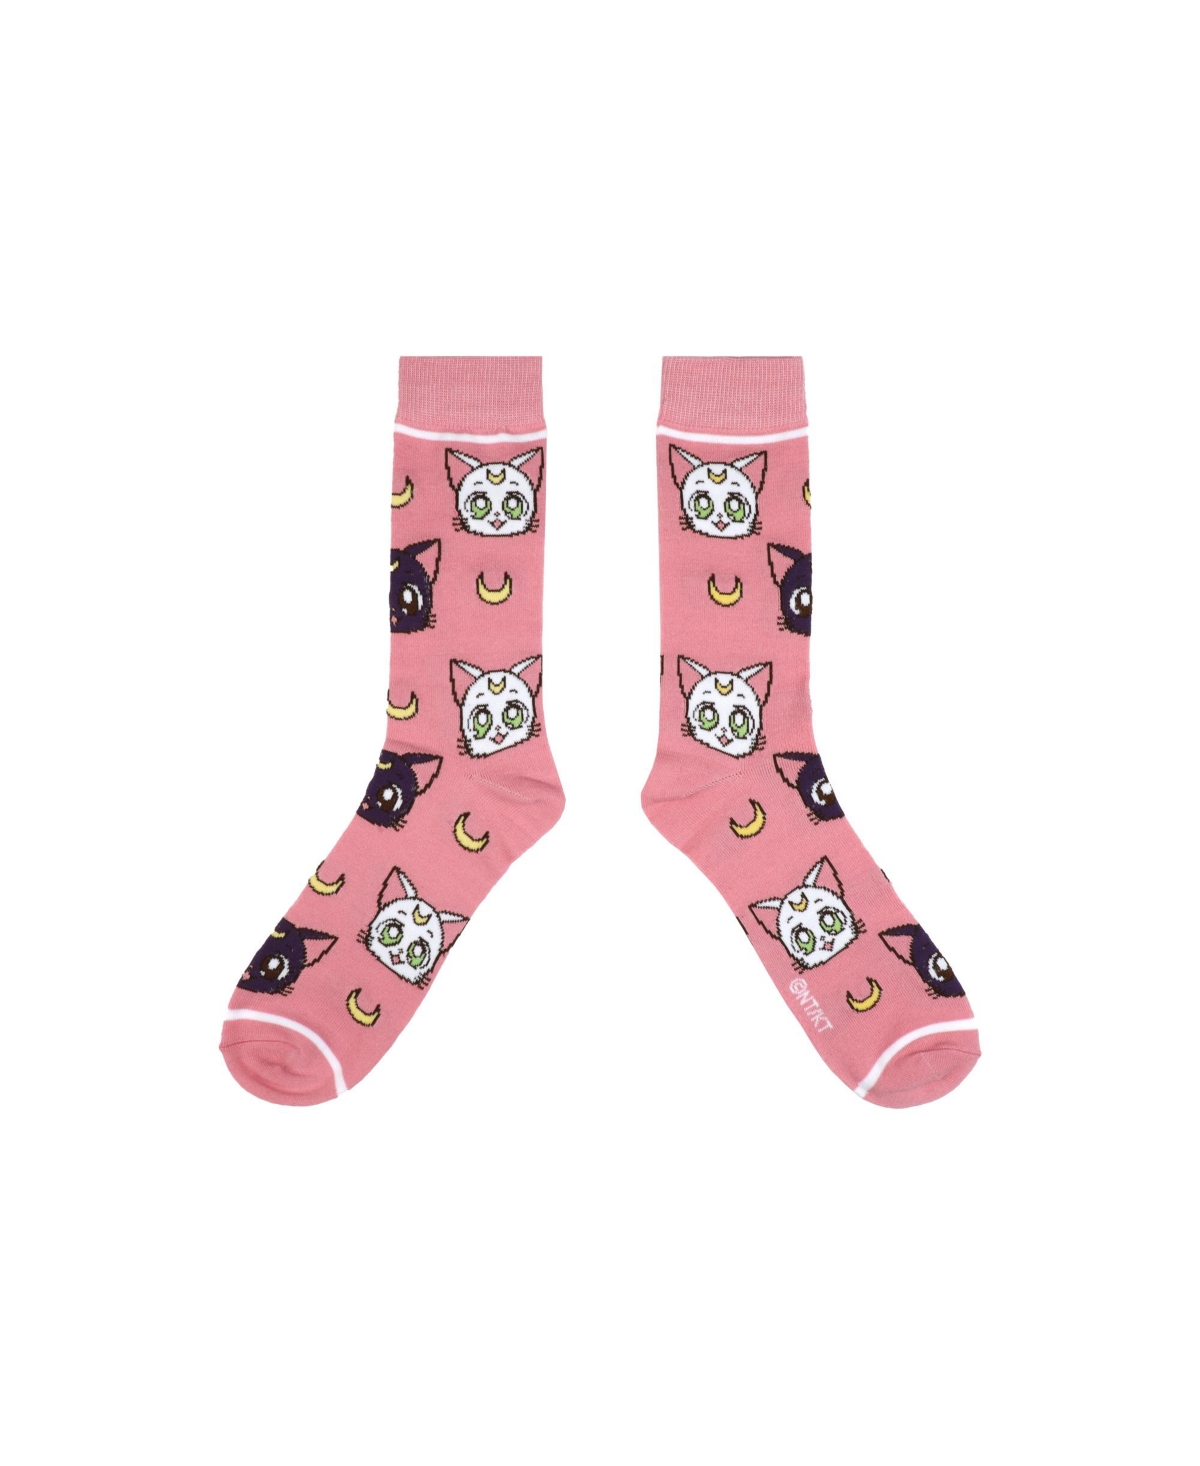 Men's Crystal Luna & Artemis Crew Socks - Pink